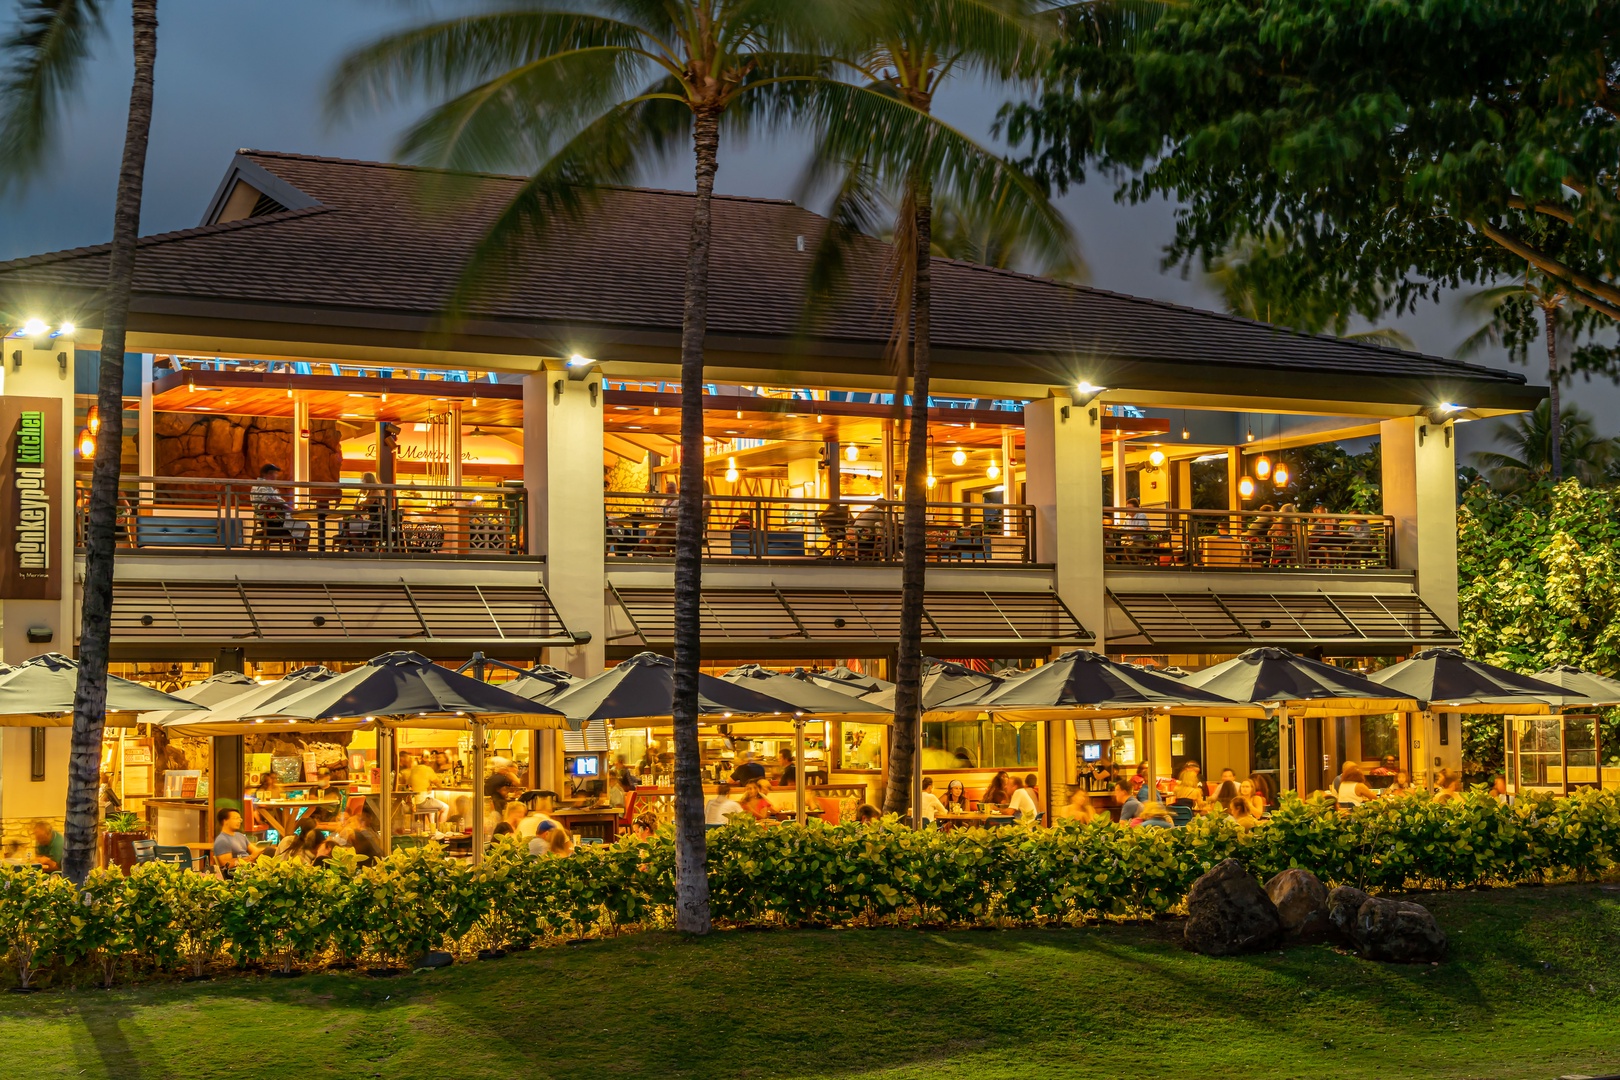 Kapolei Vacation Rentals, Fairways at Ko Olina 20G - Enjoy dining and shopping on the island.